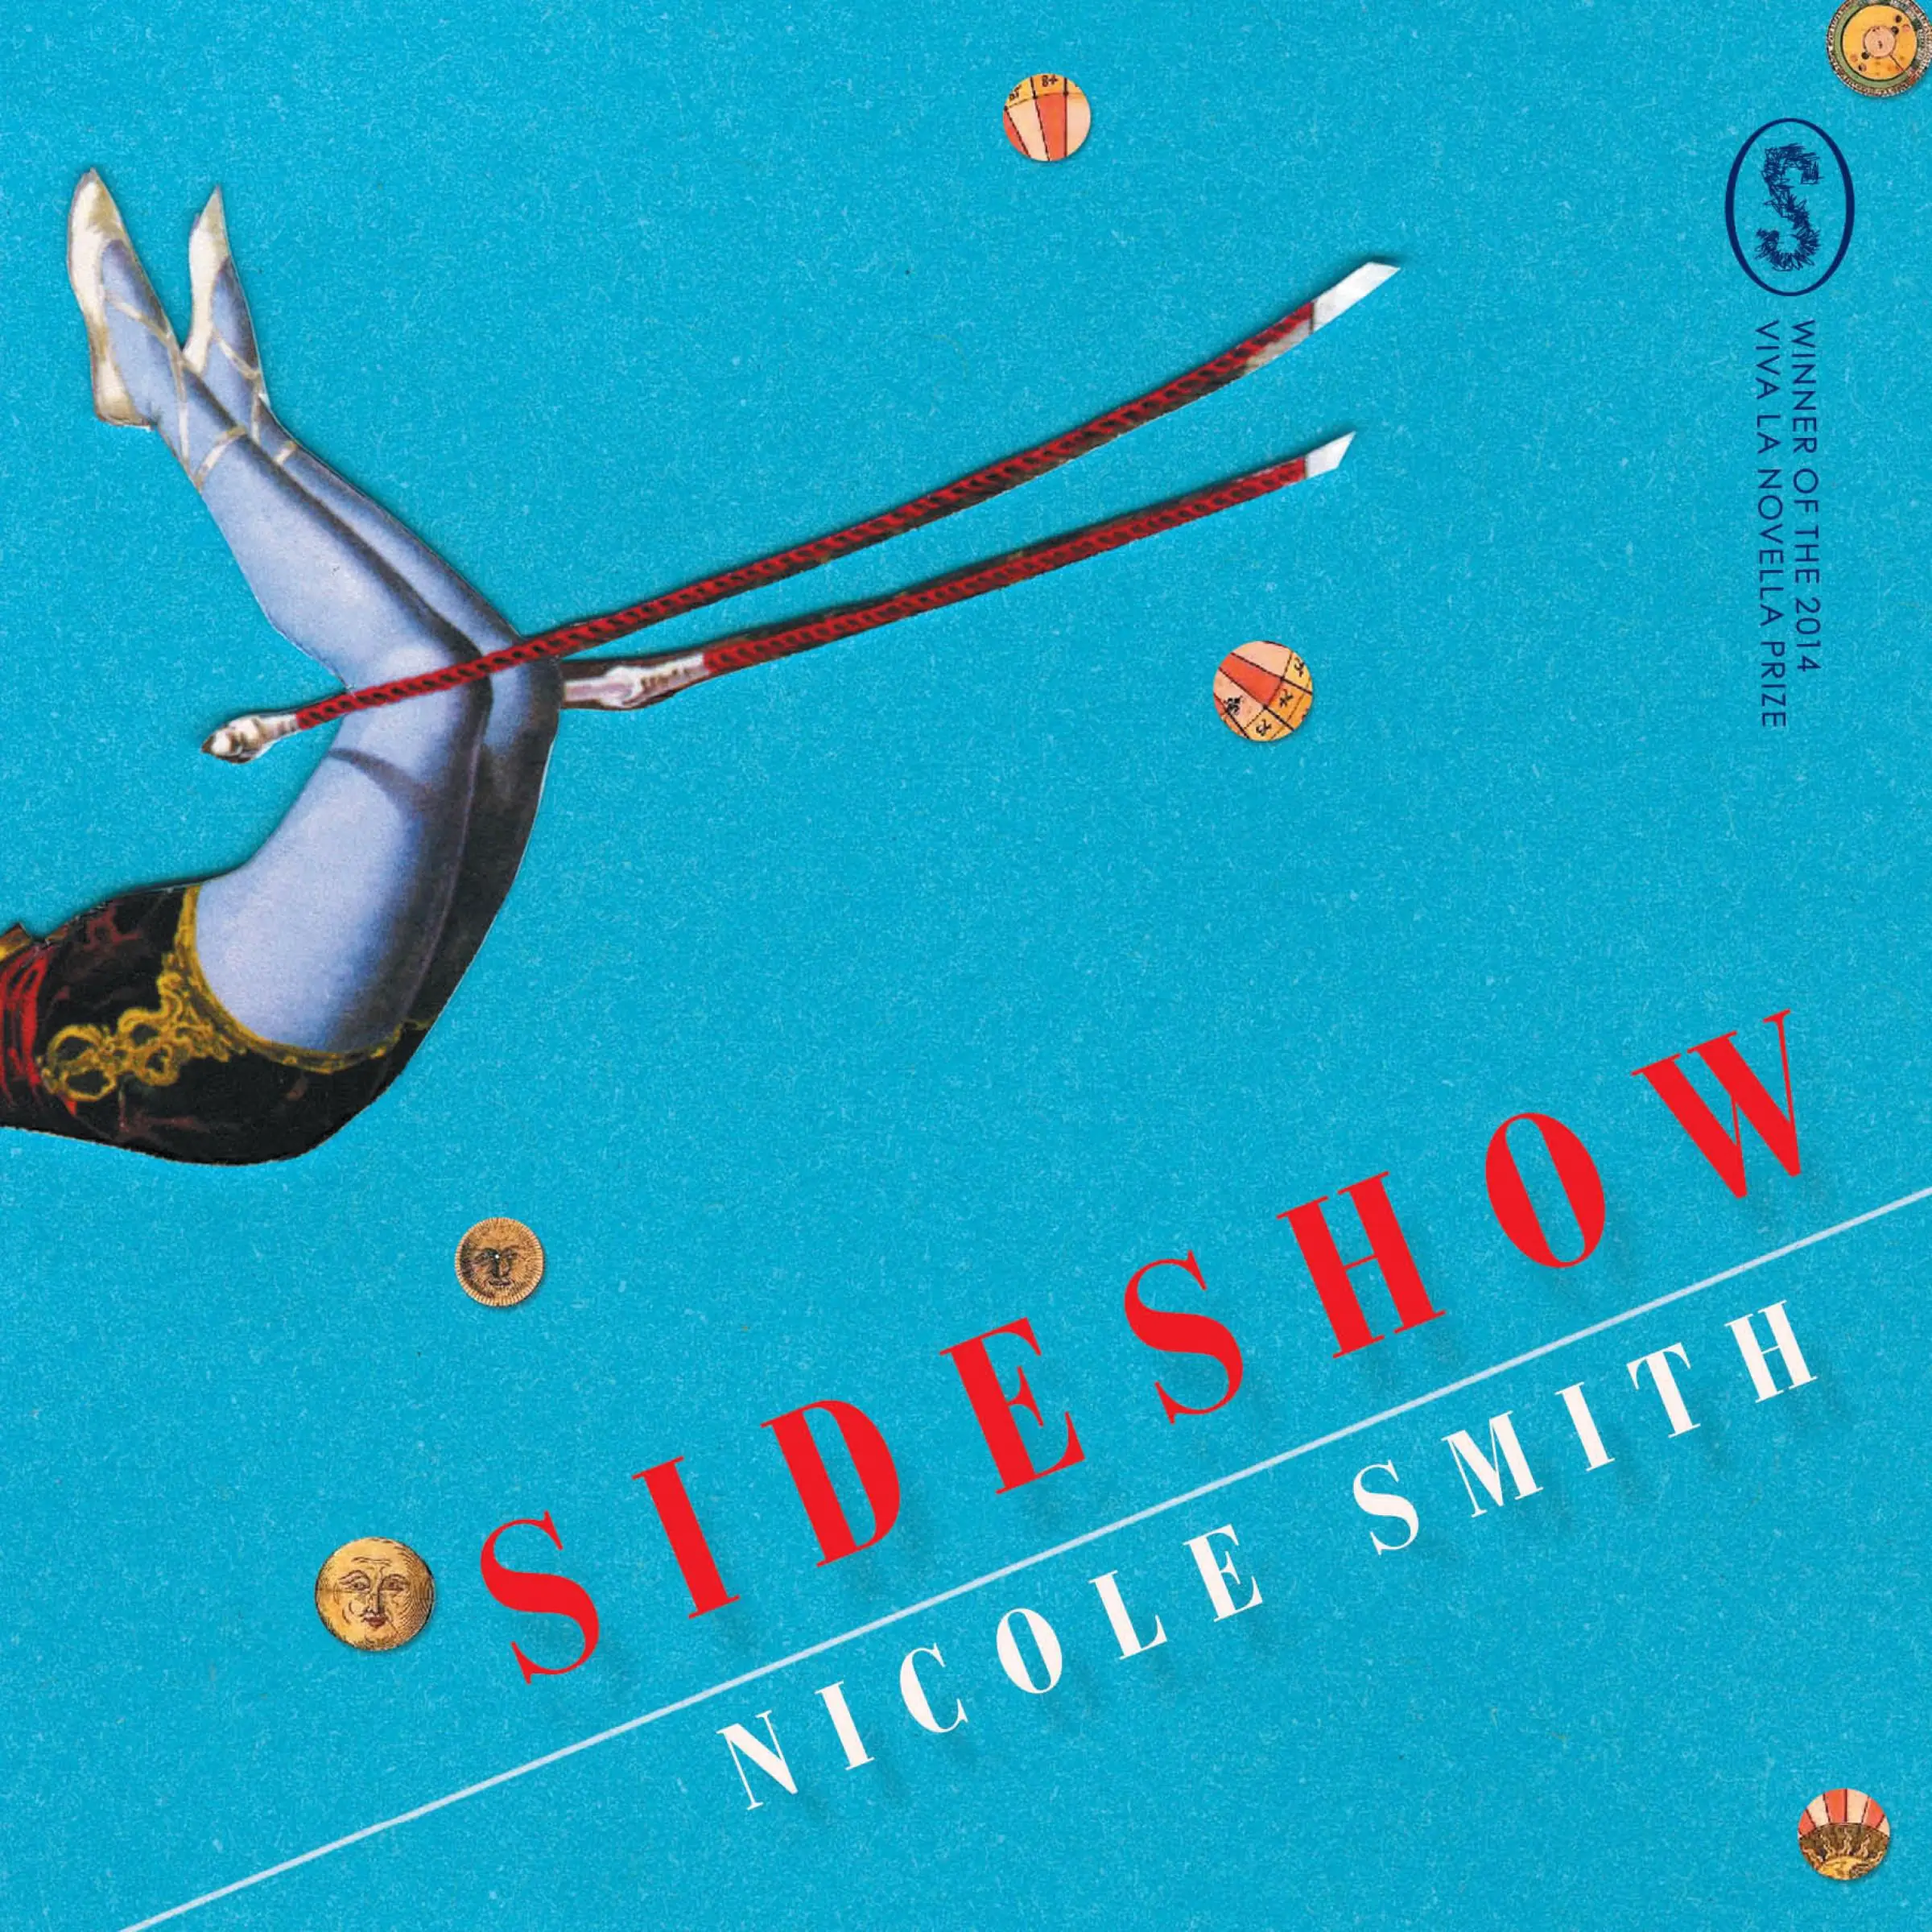 Sideshow by Nicole Smith Audiobook